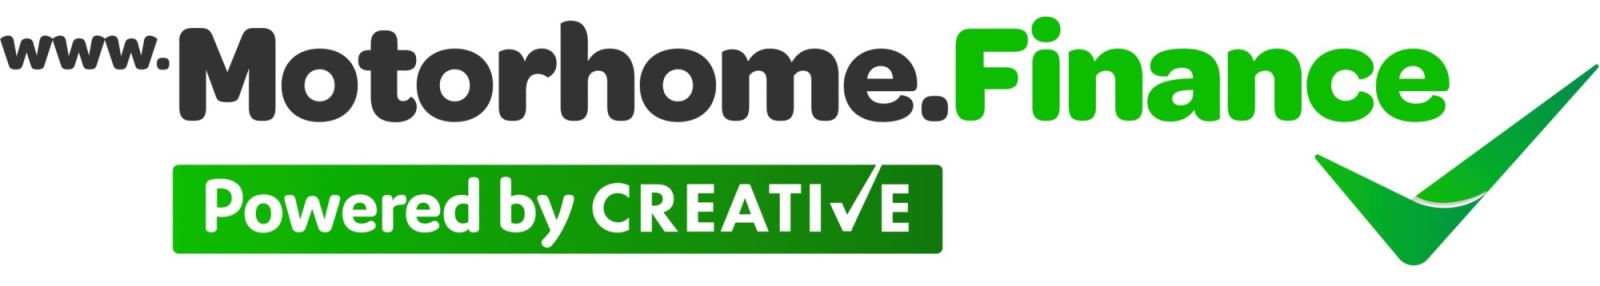 Motorhome.finance Logo